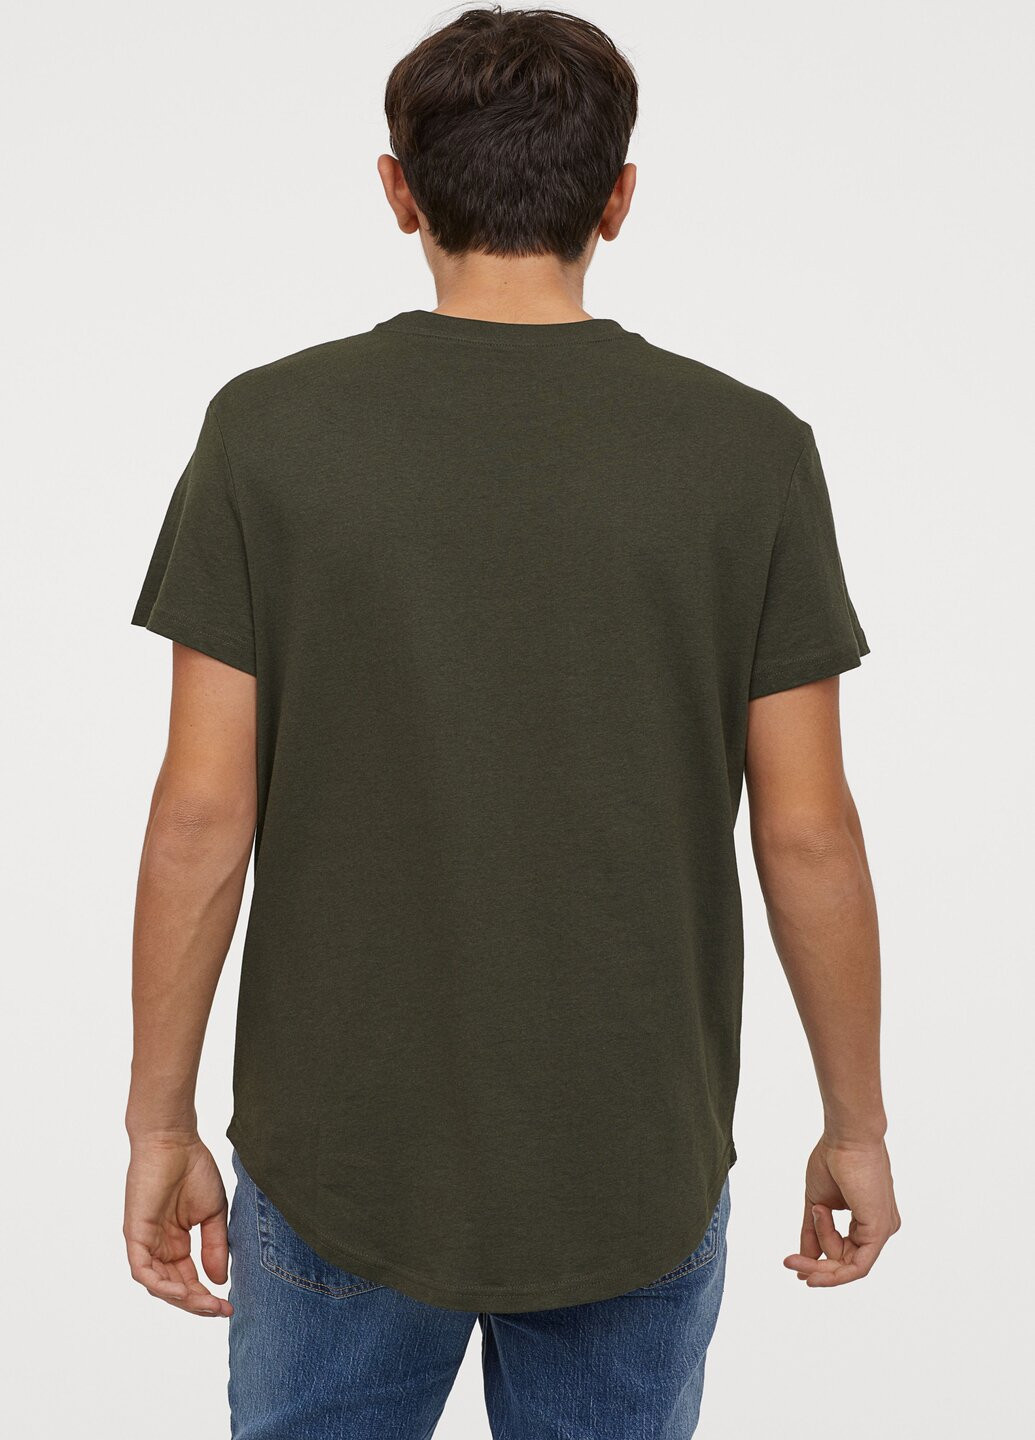 Хаки (оливковая) футболка H&M